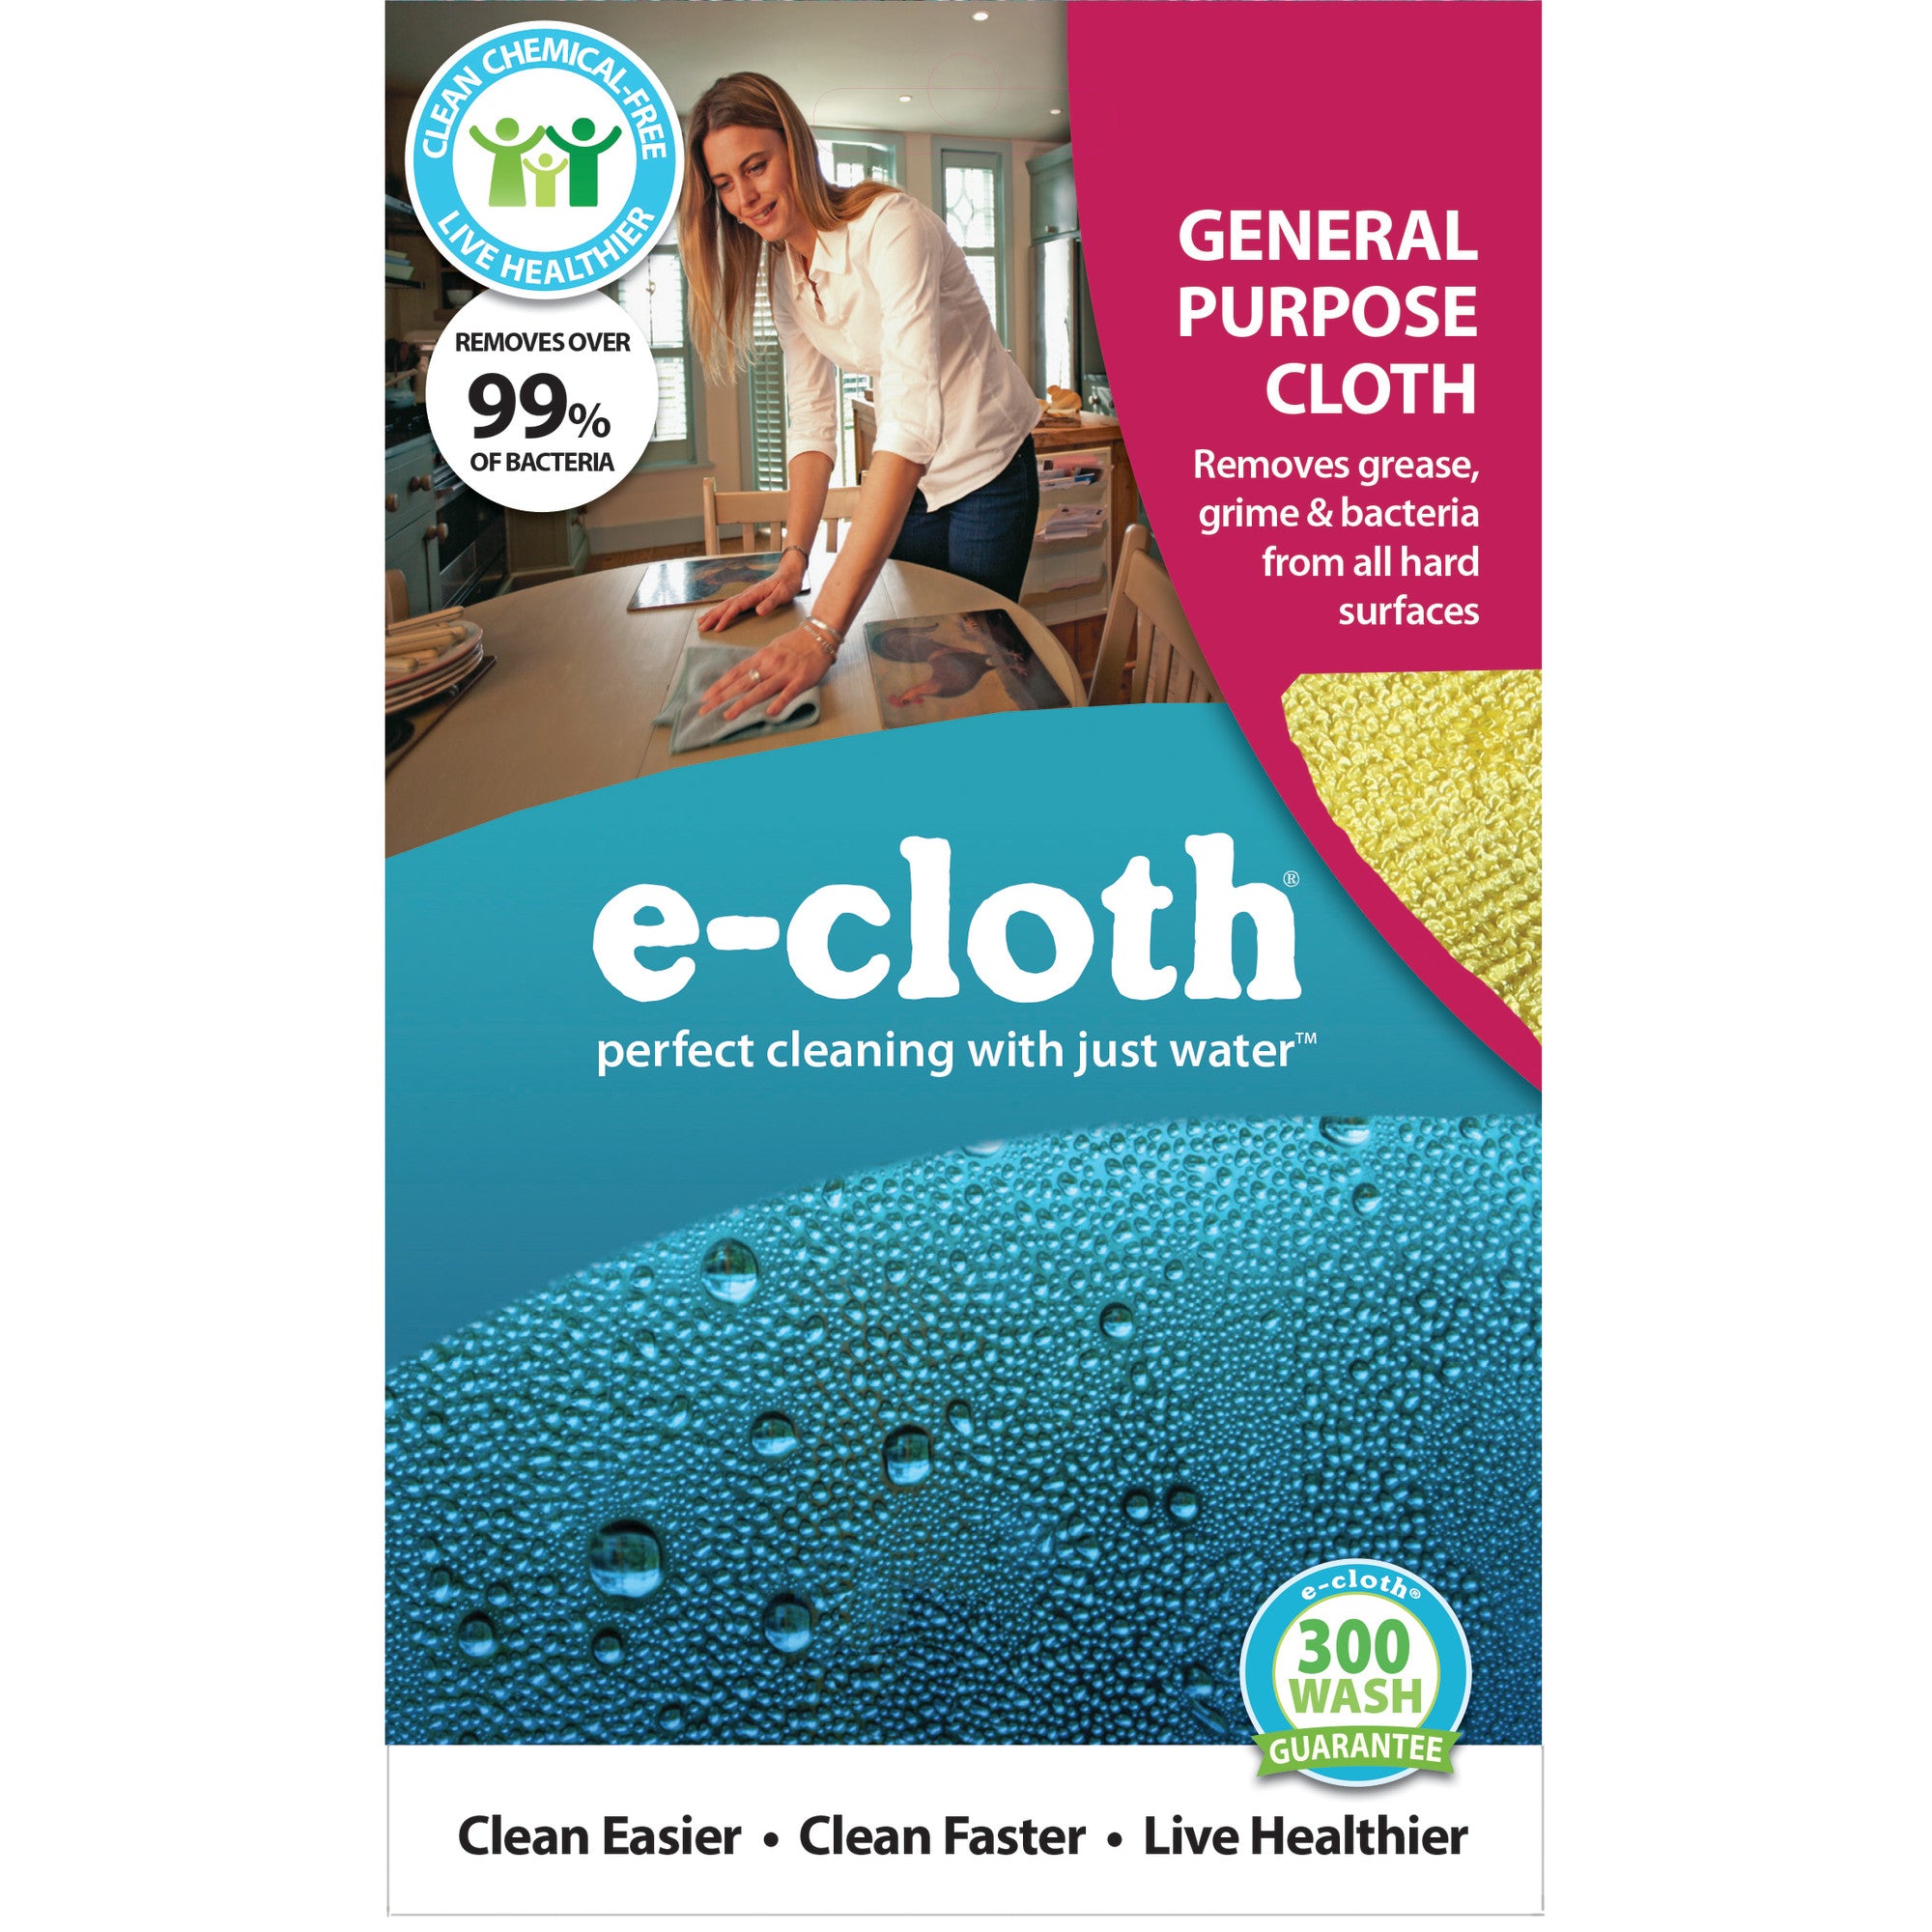 General Purpose Cloth - Premium Microfiber | E-Cloth Inc.